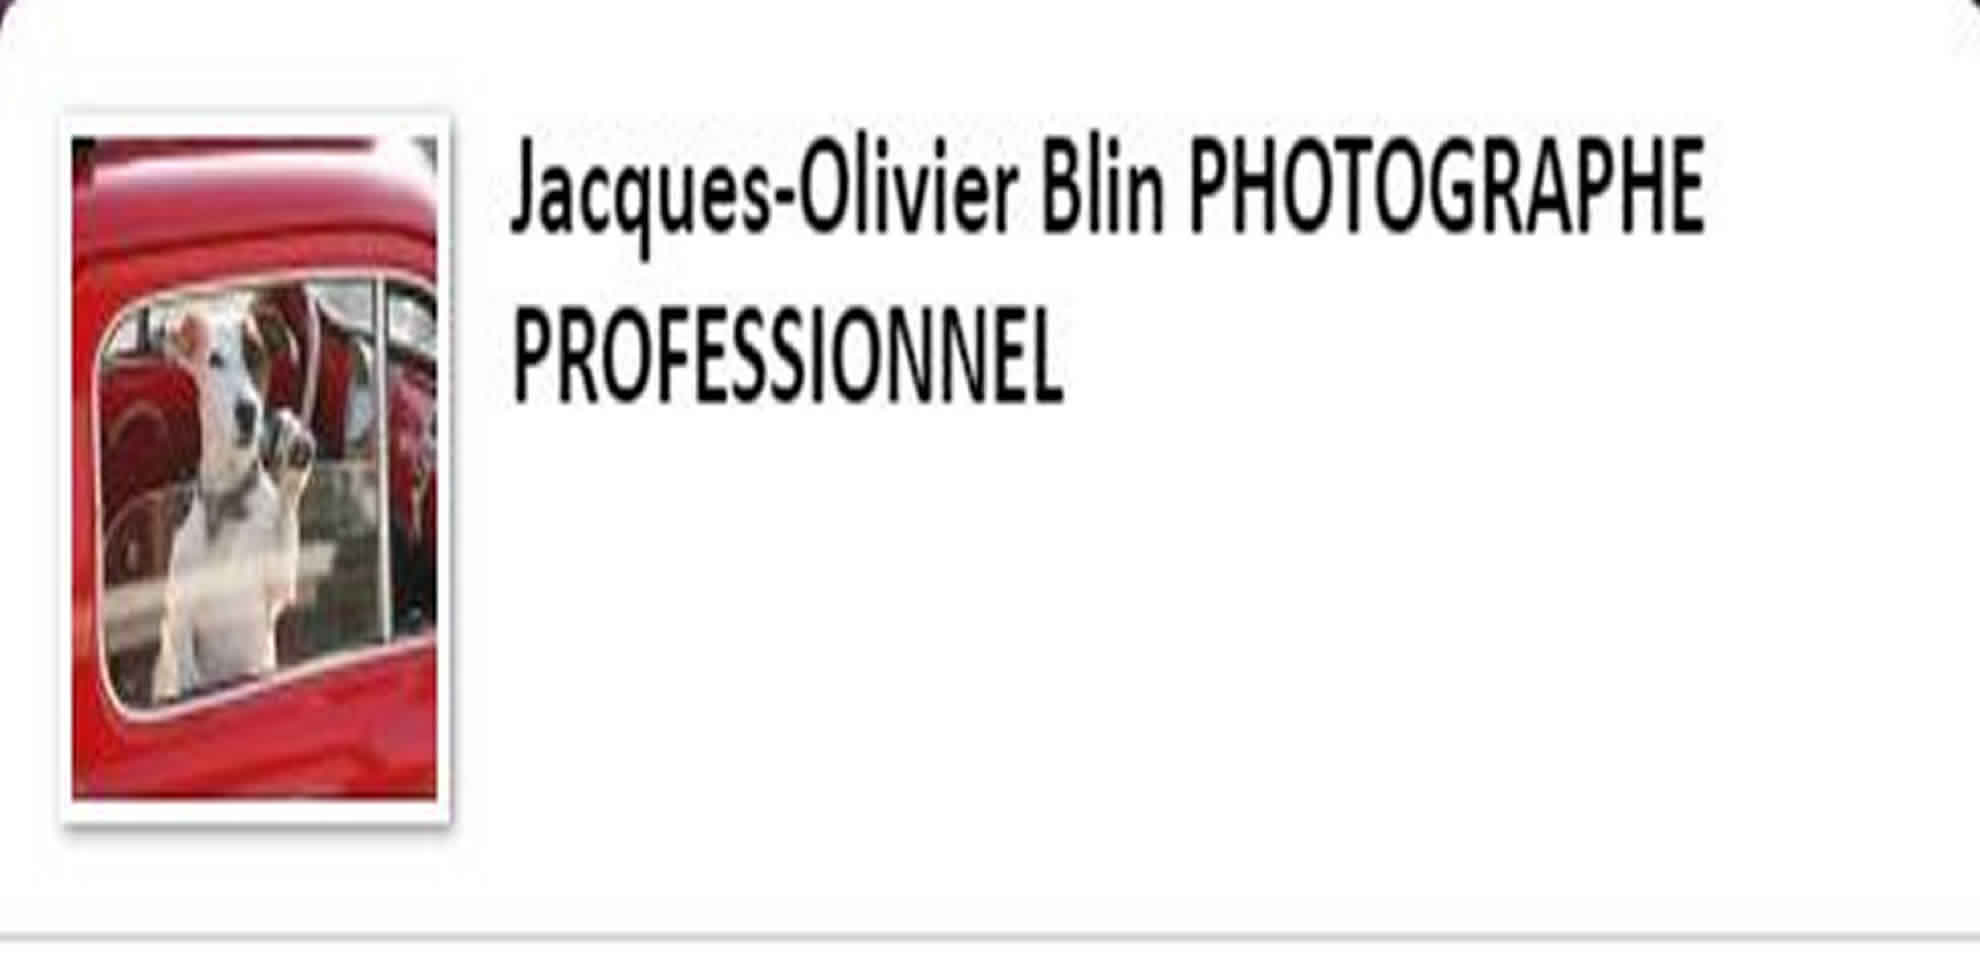 Jacques_Olivier Blin